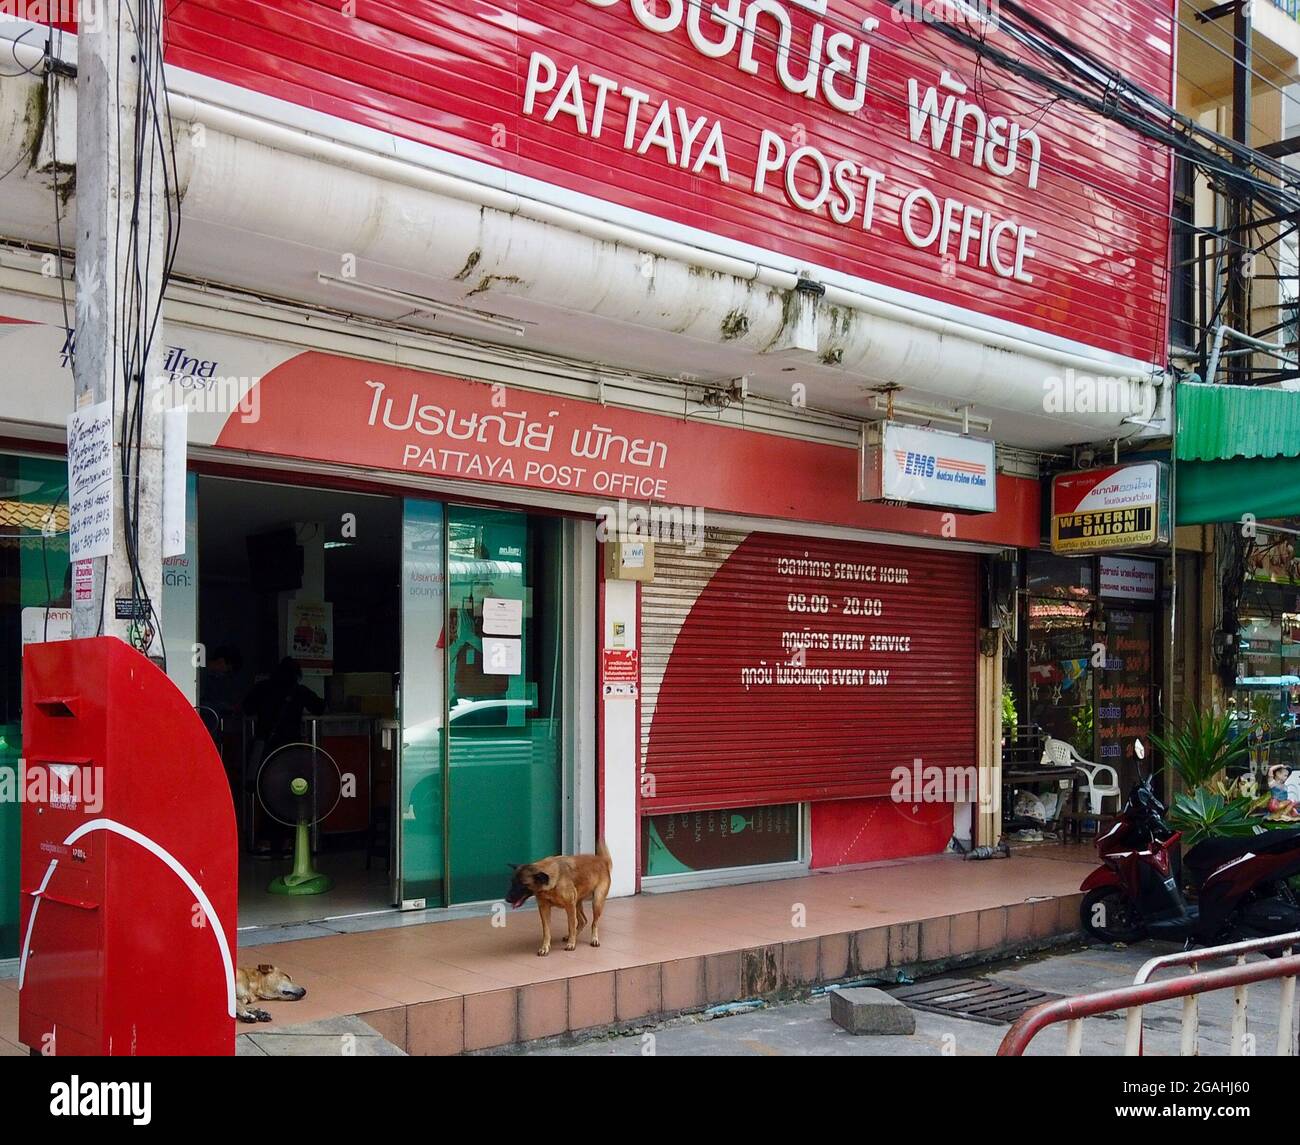 Business Street Soi Post Office Pattaya Thailand Stock Photo - Alamy